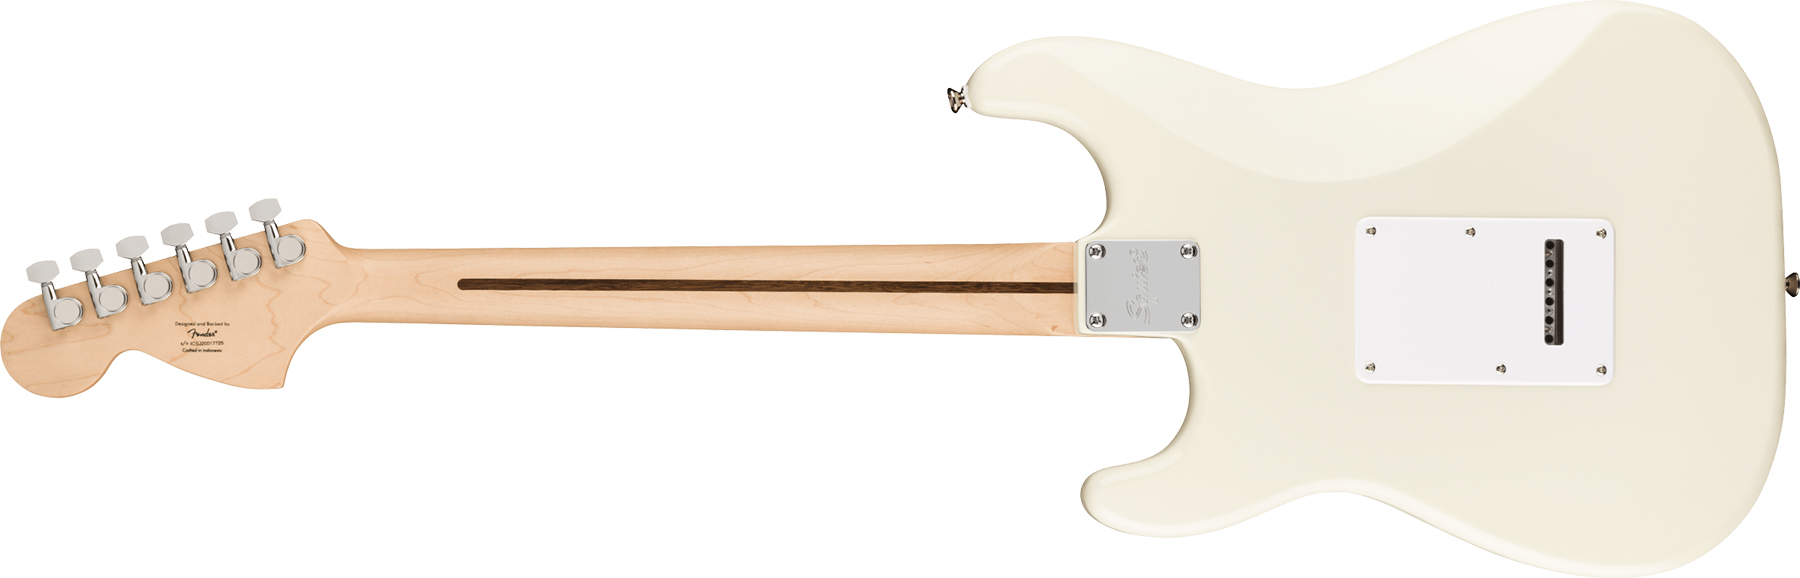 Squier Strat Affinity 2021 Sss Trem Mn - Olympic White - Guitare Électrique Forme Str - Variation 1